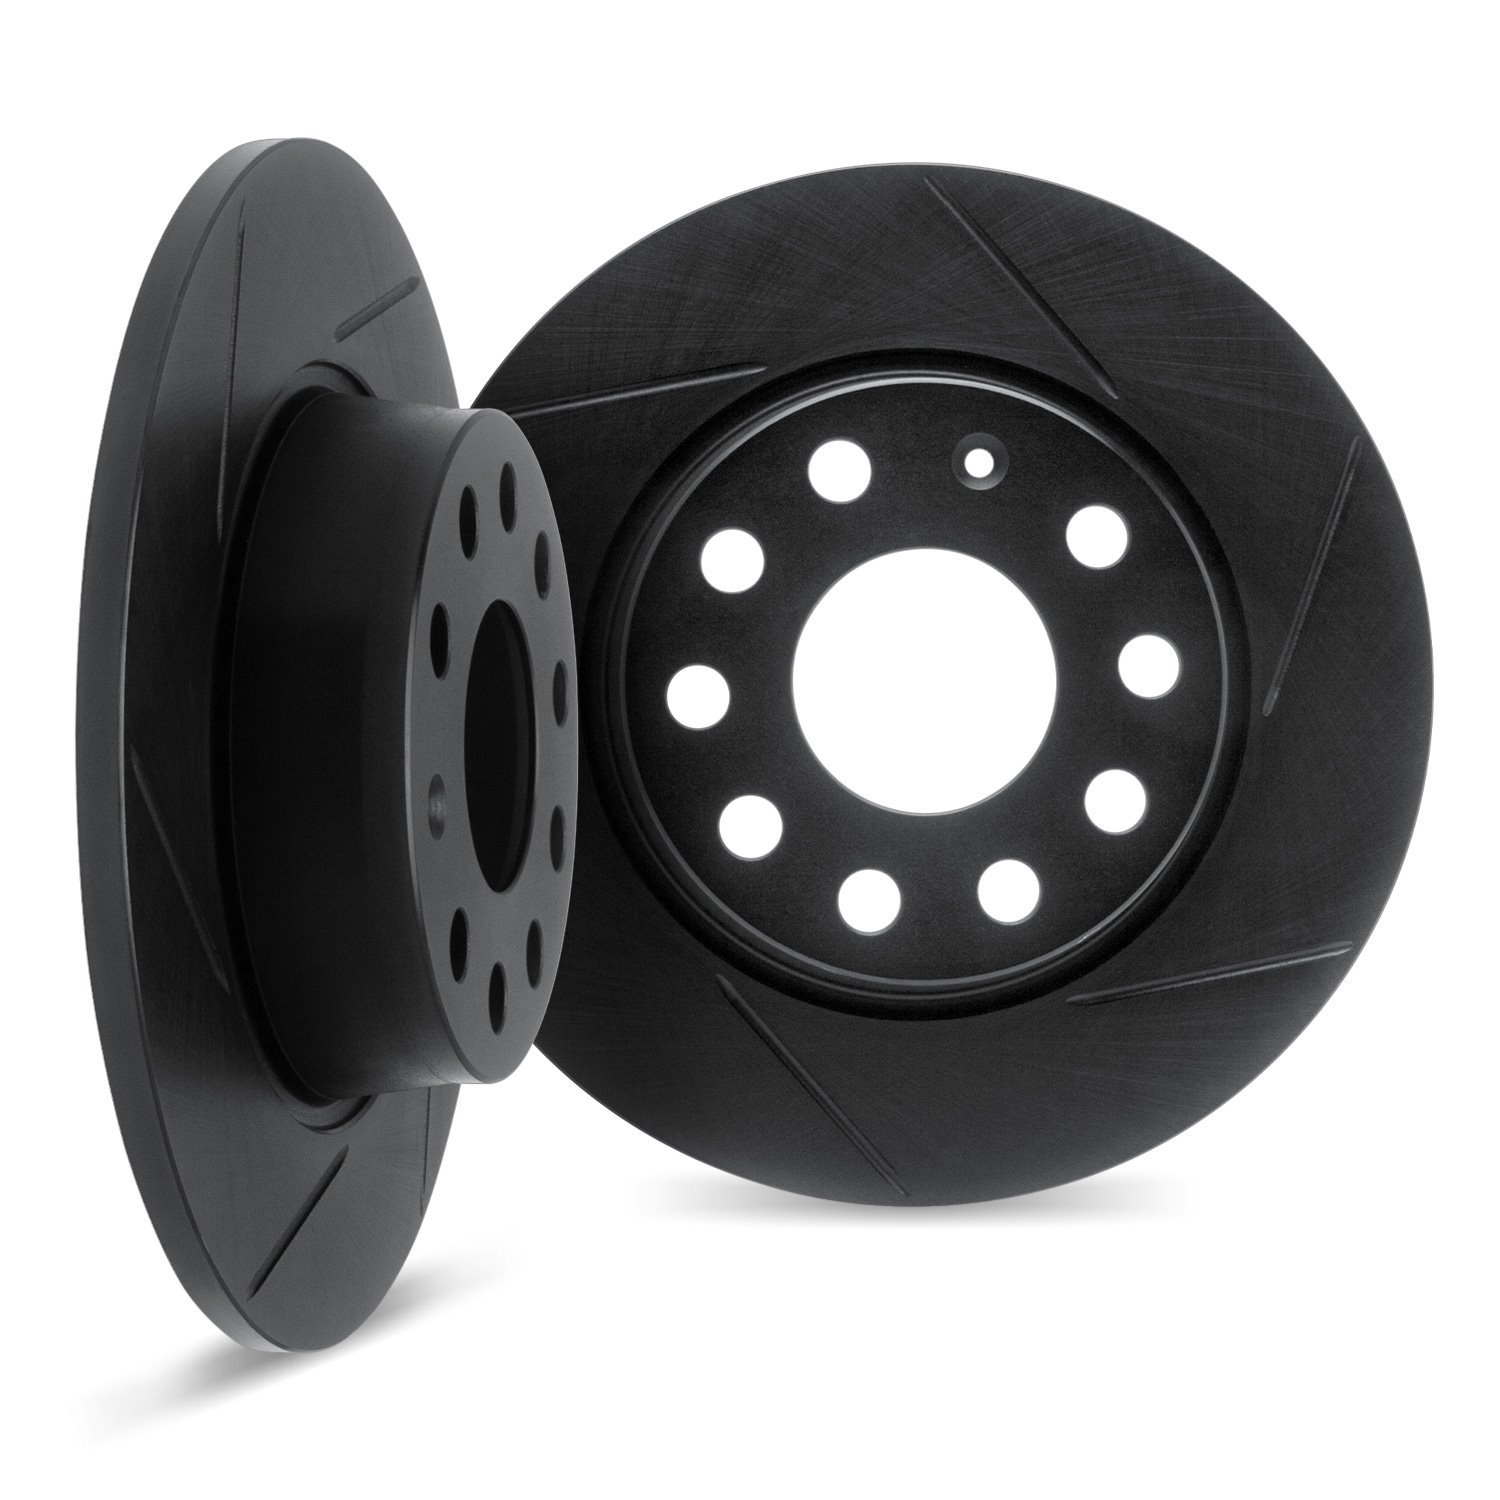 Slotted Brake Rotors [Black], Fits Select Kia/Hyundai/Genesis